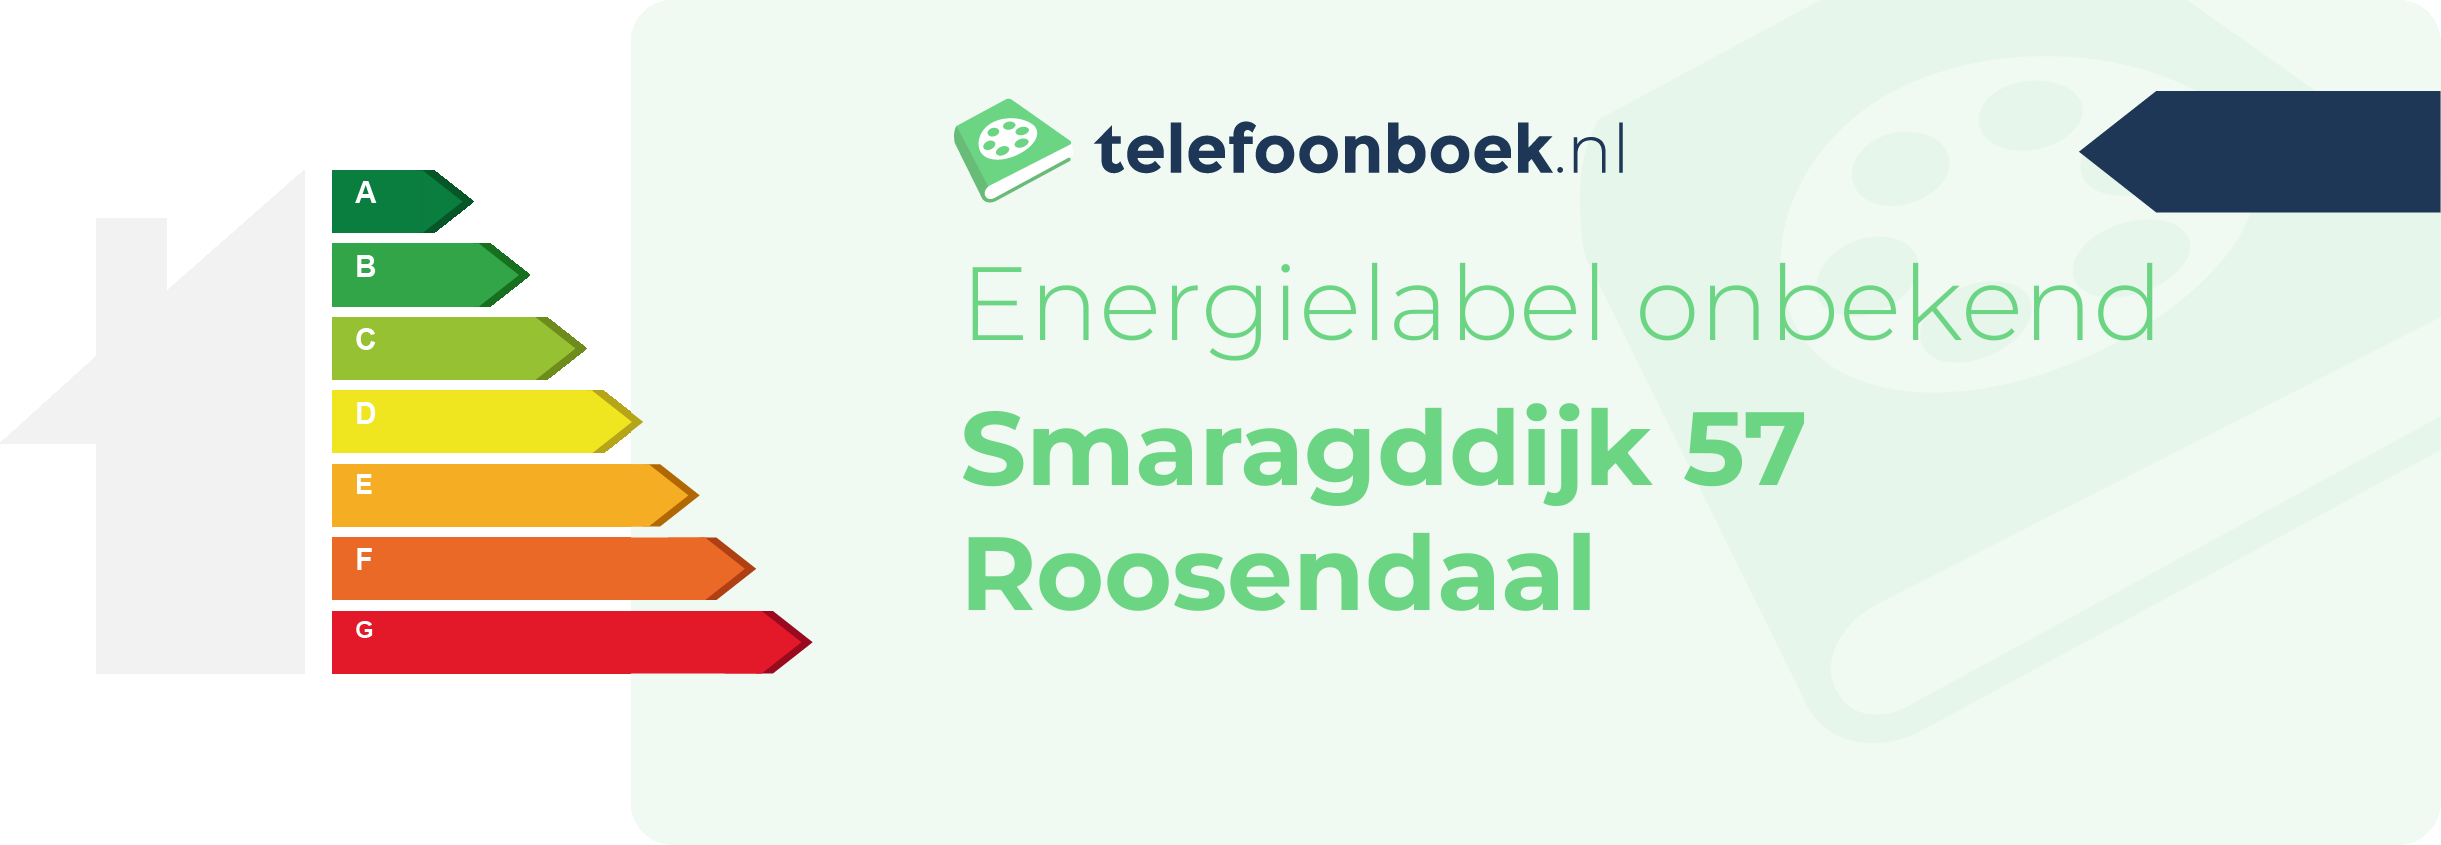 Energielabel Smaragddijk 57 Roosendaal